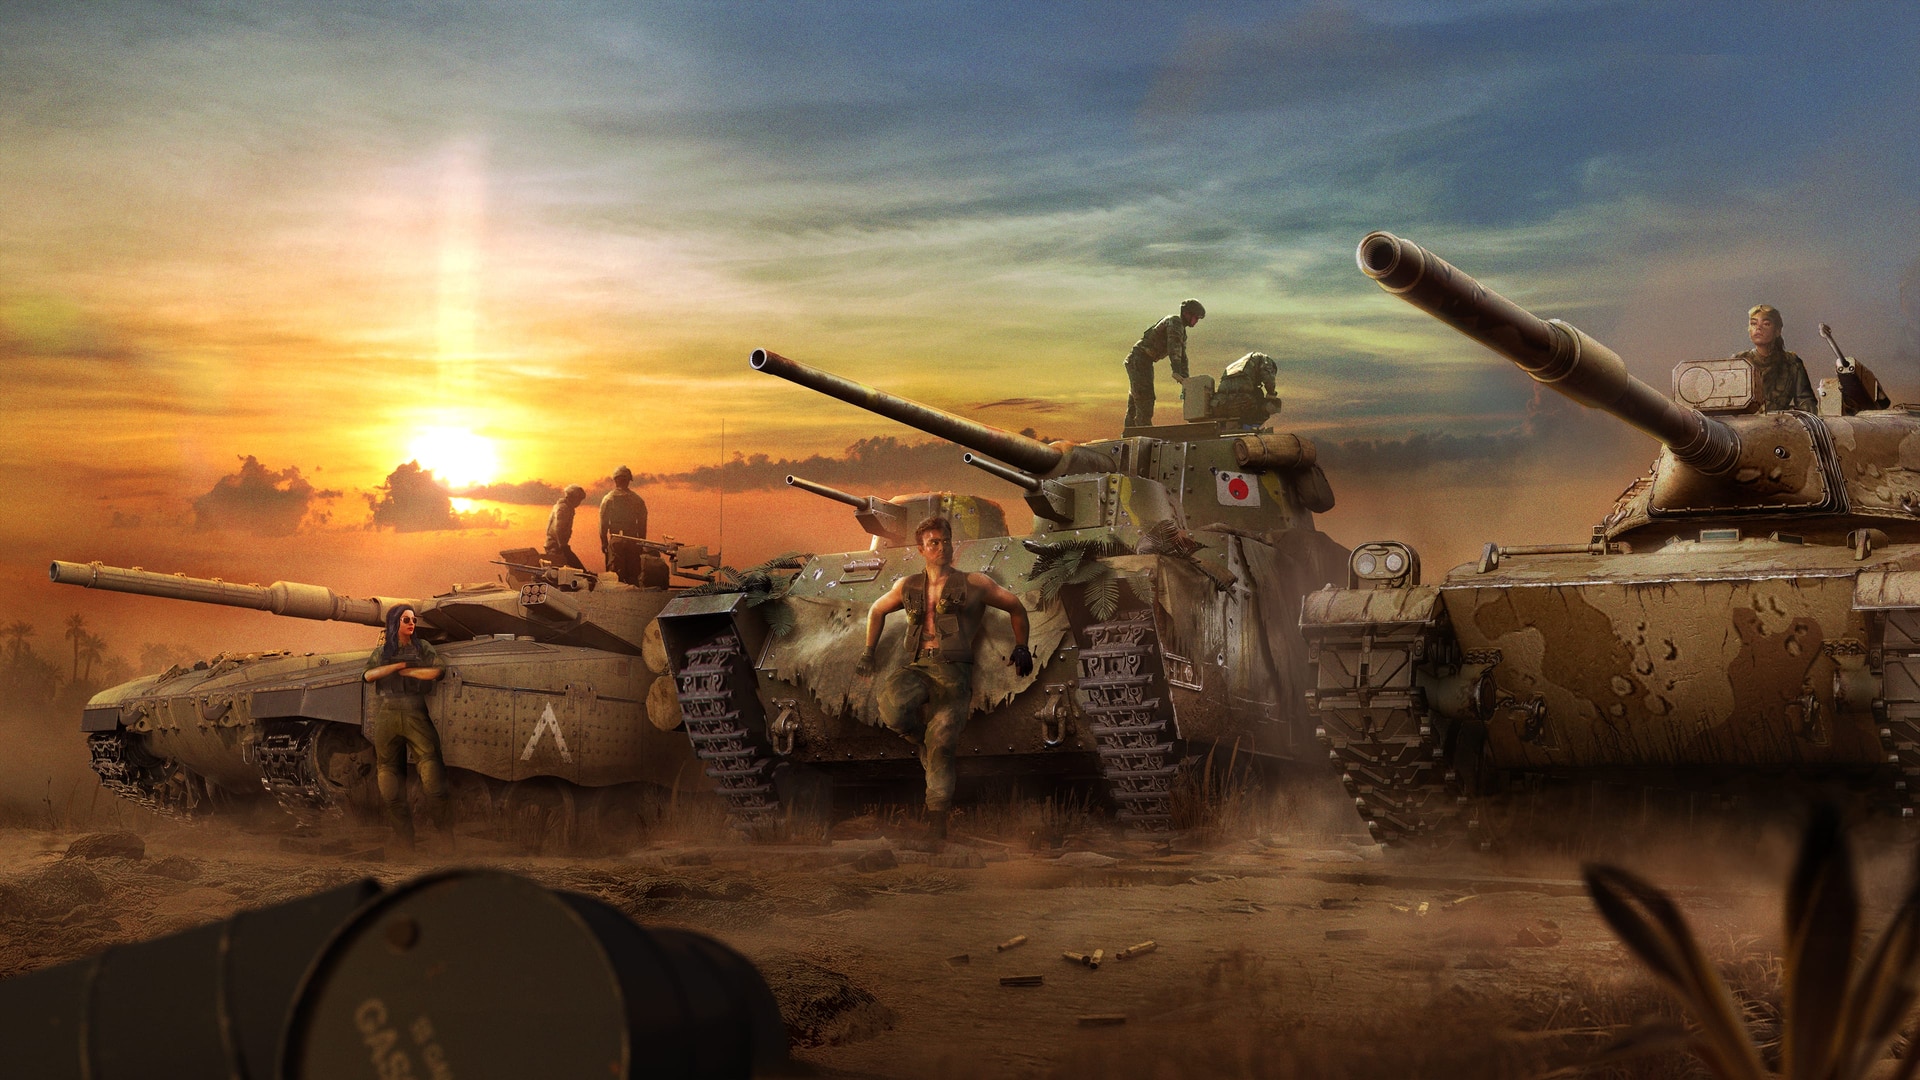 Tank Background